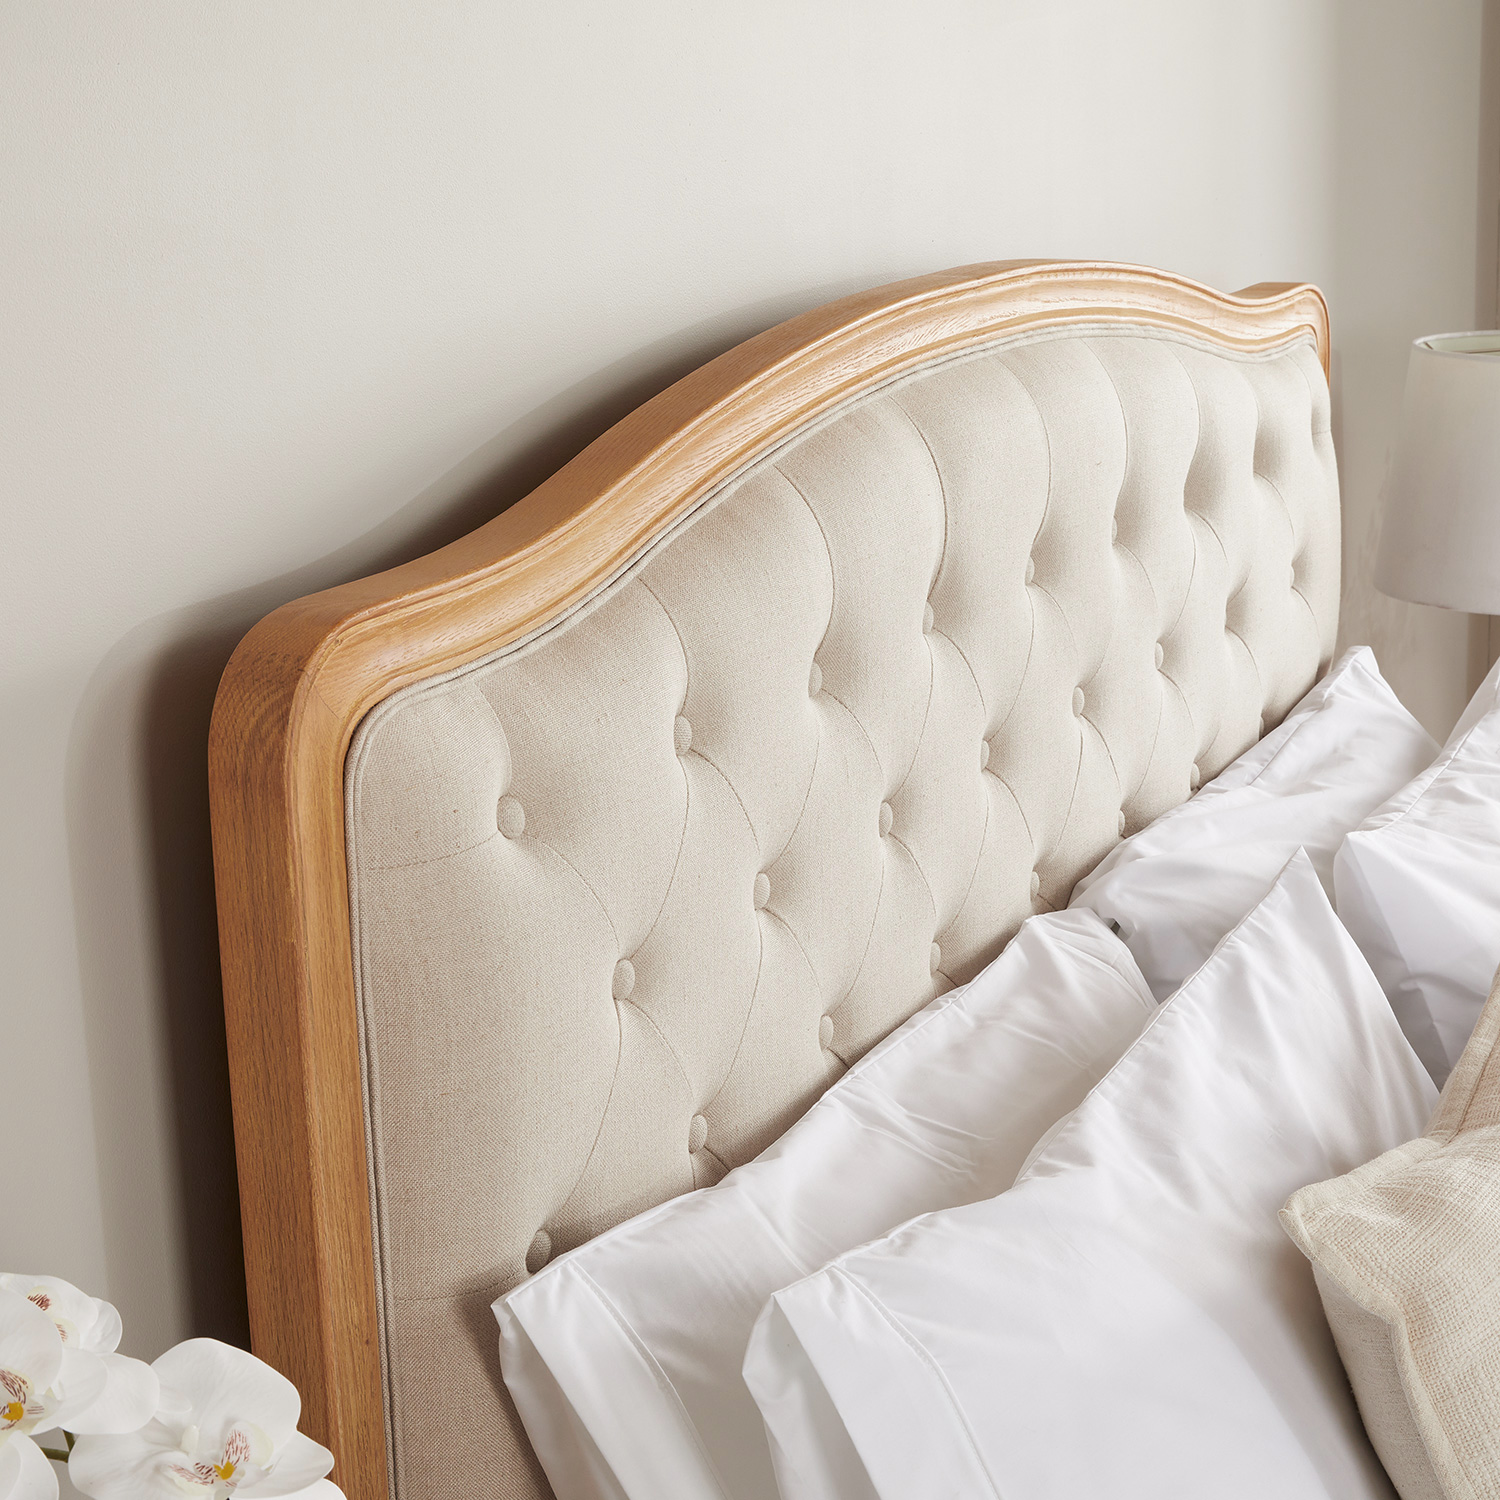 Celeste French Oak Buttoned Upholstered High Foot Board Bed – Super King Size